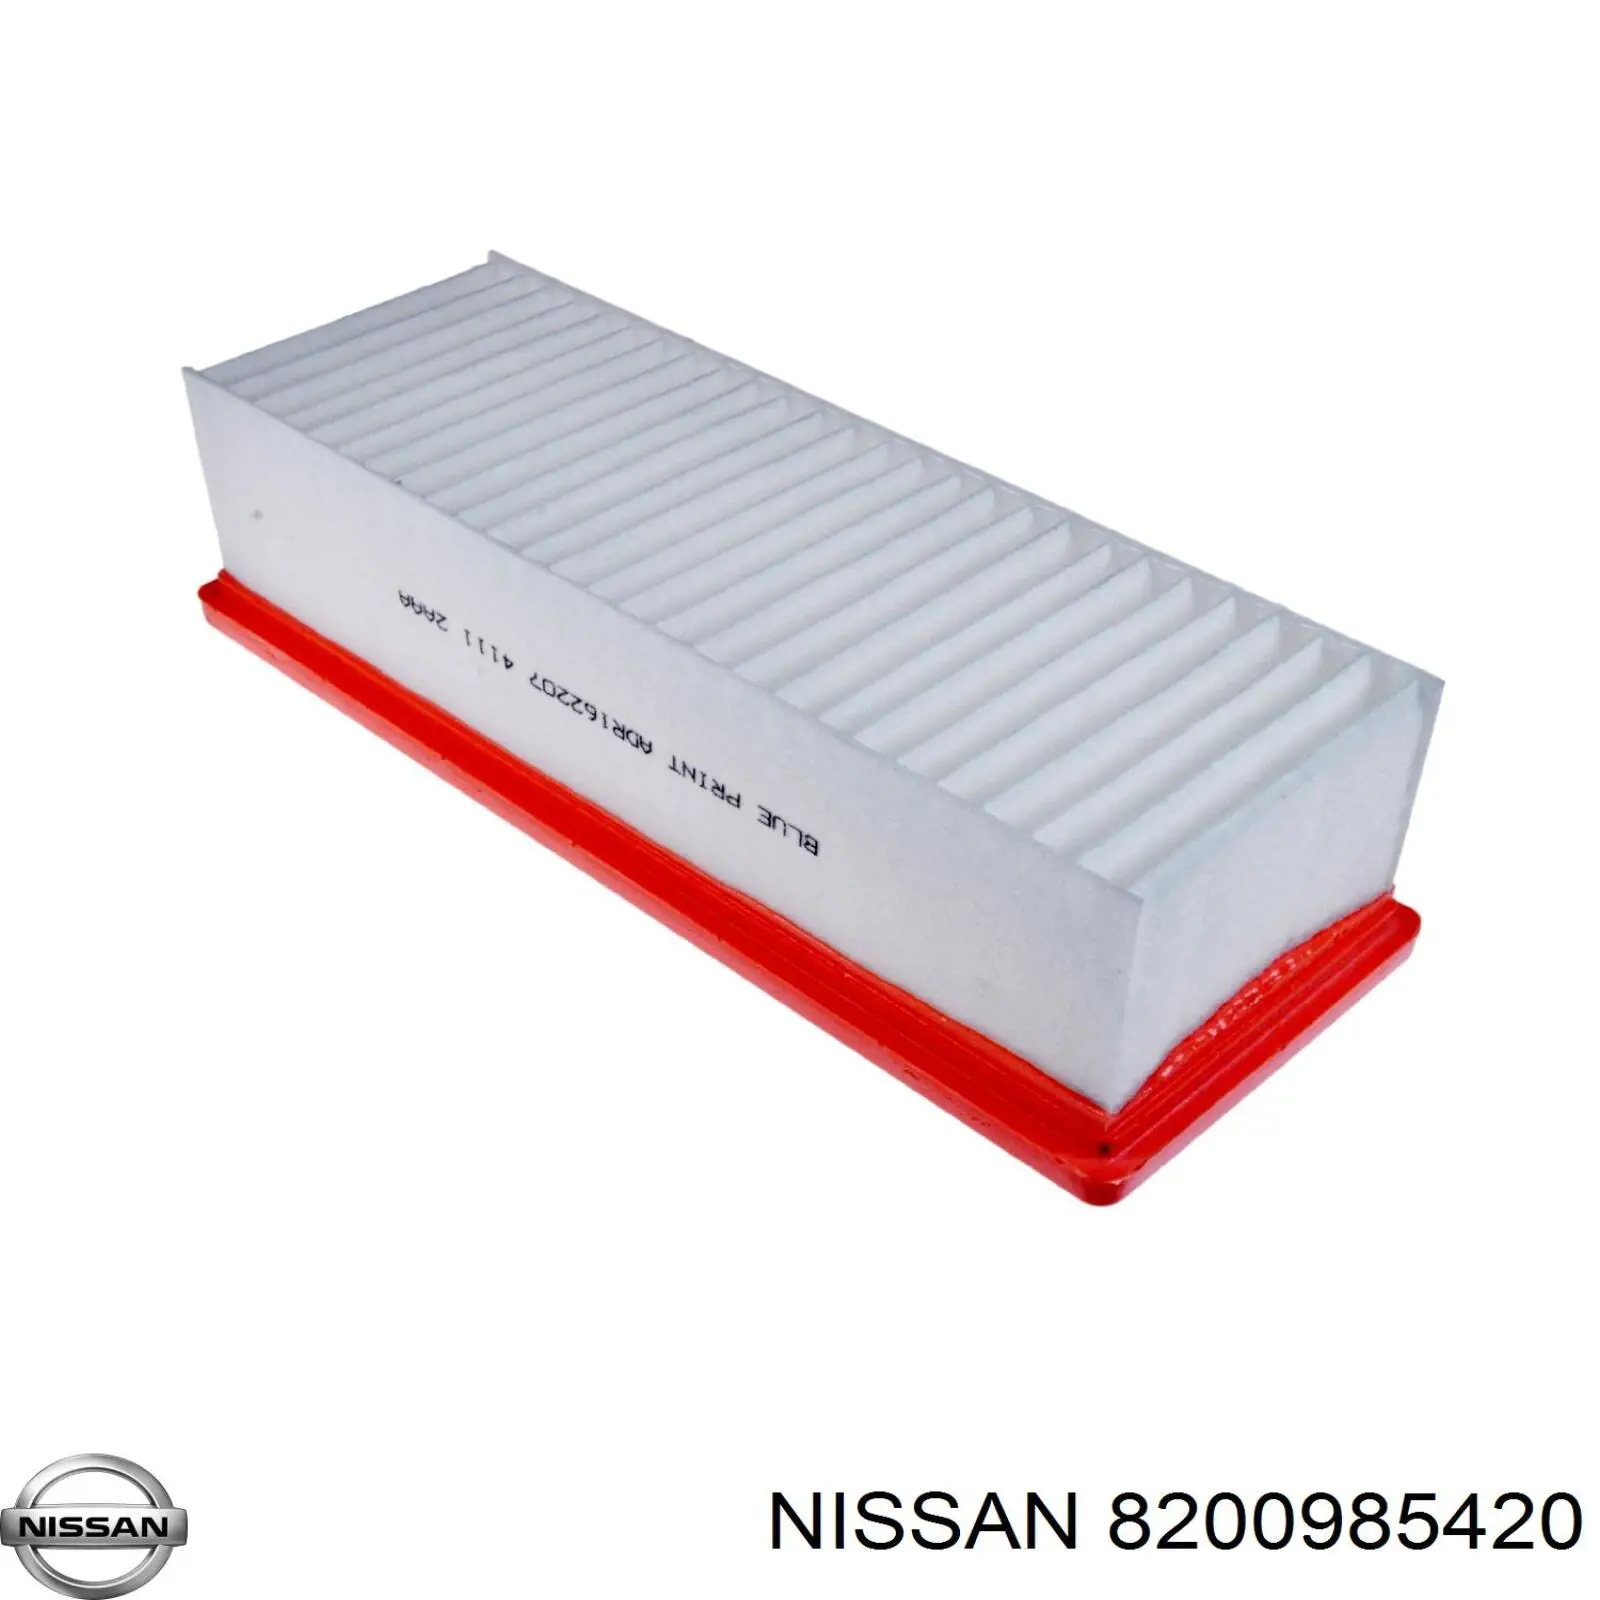 8200985420 Nissan filtro de aire